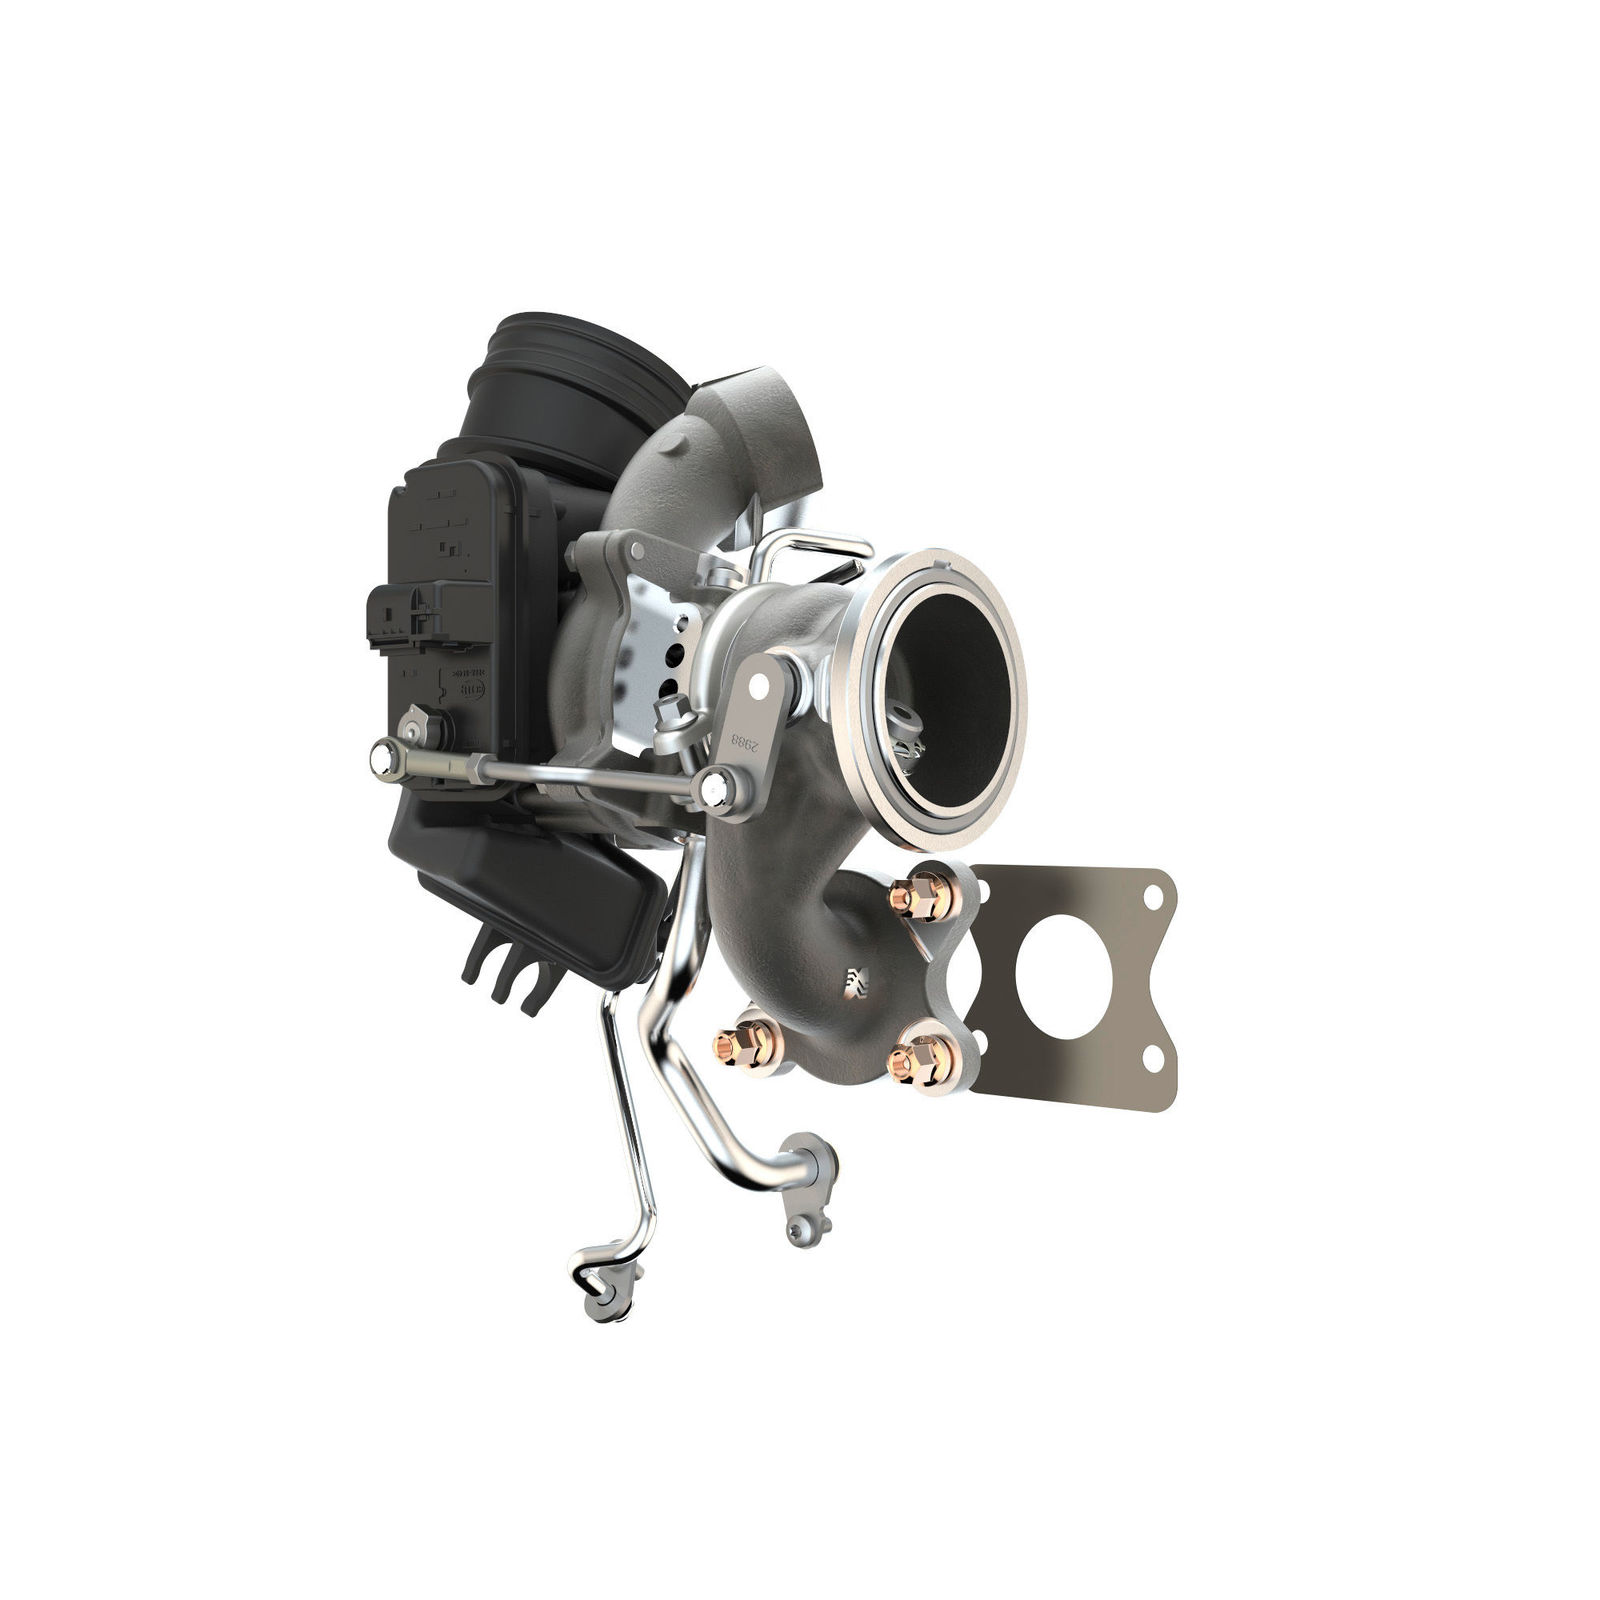 1.0 TSI engine (three cylinder, exhaust turbocharger)